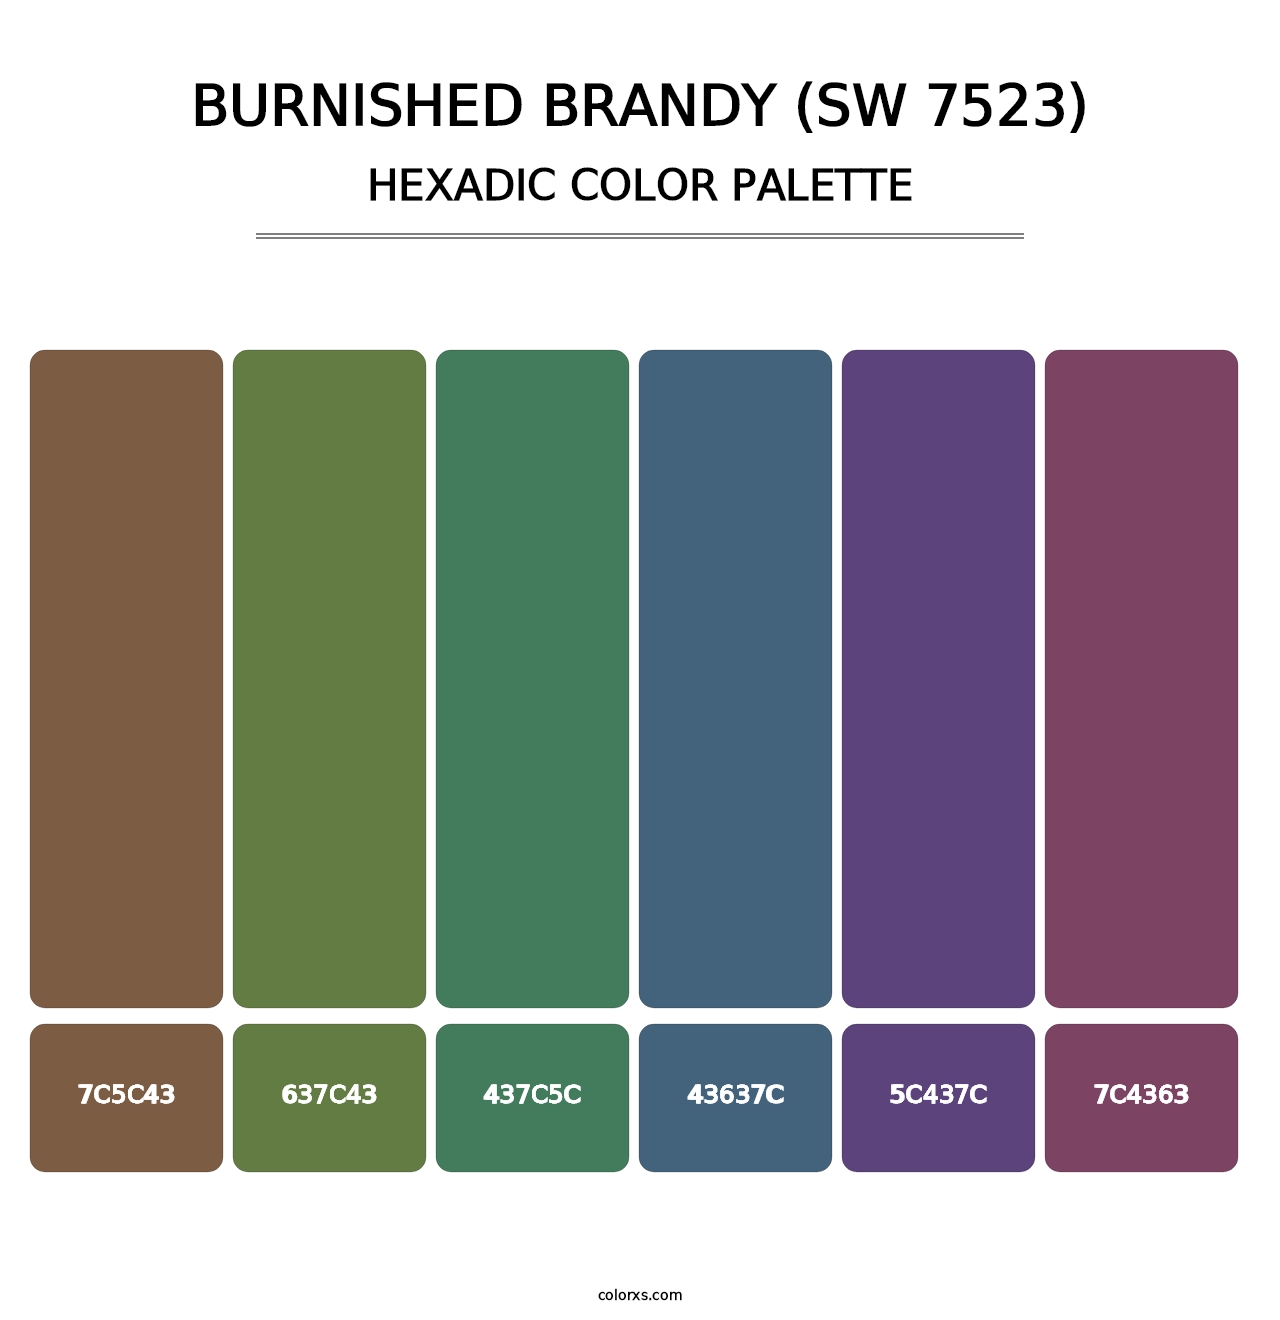 Burnished Brandy (SW 7523) - Hexadic Color Palette